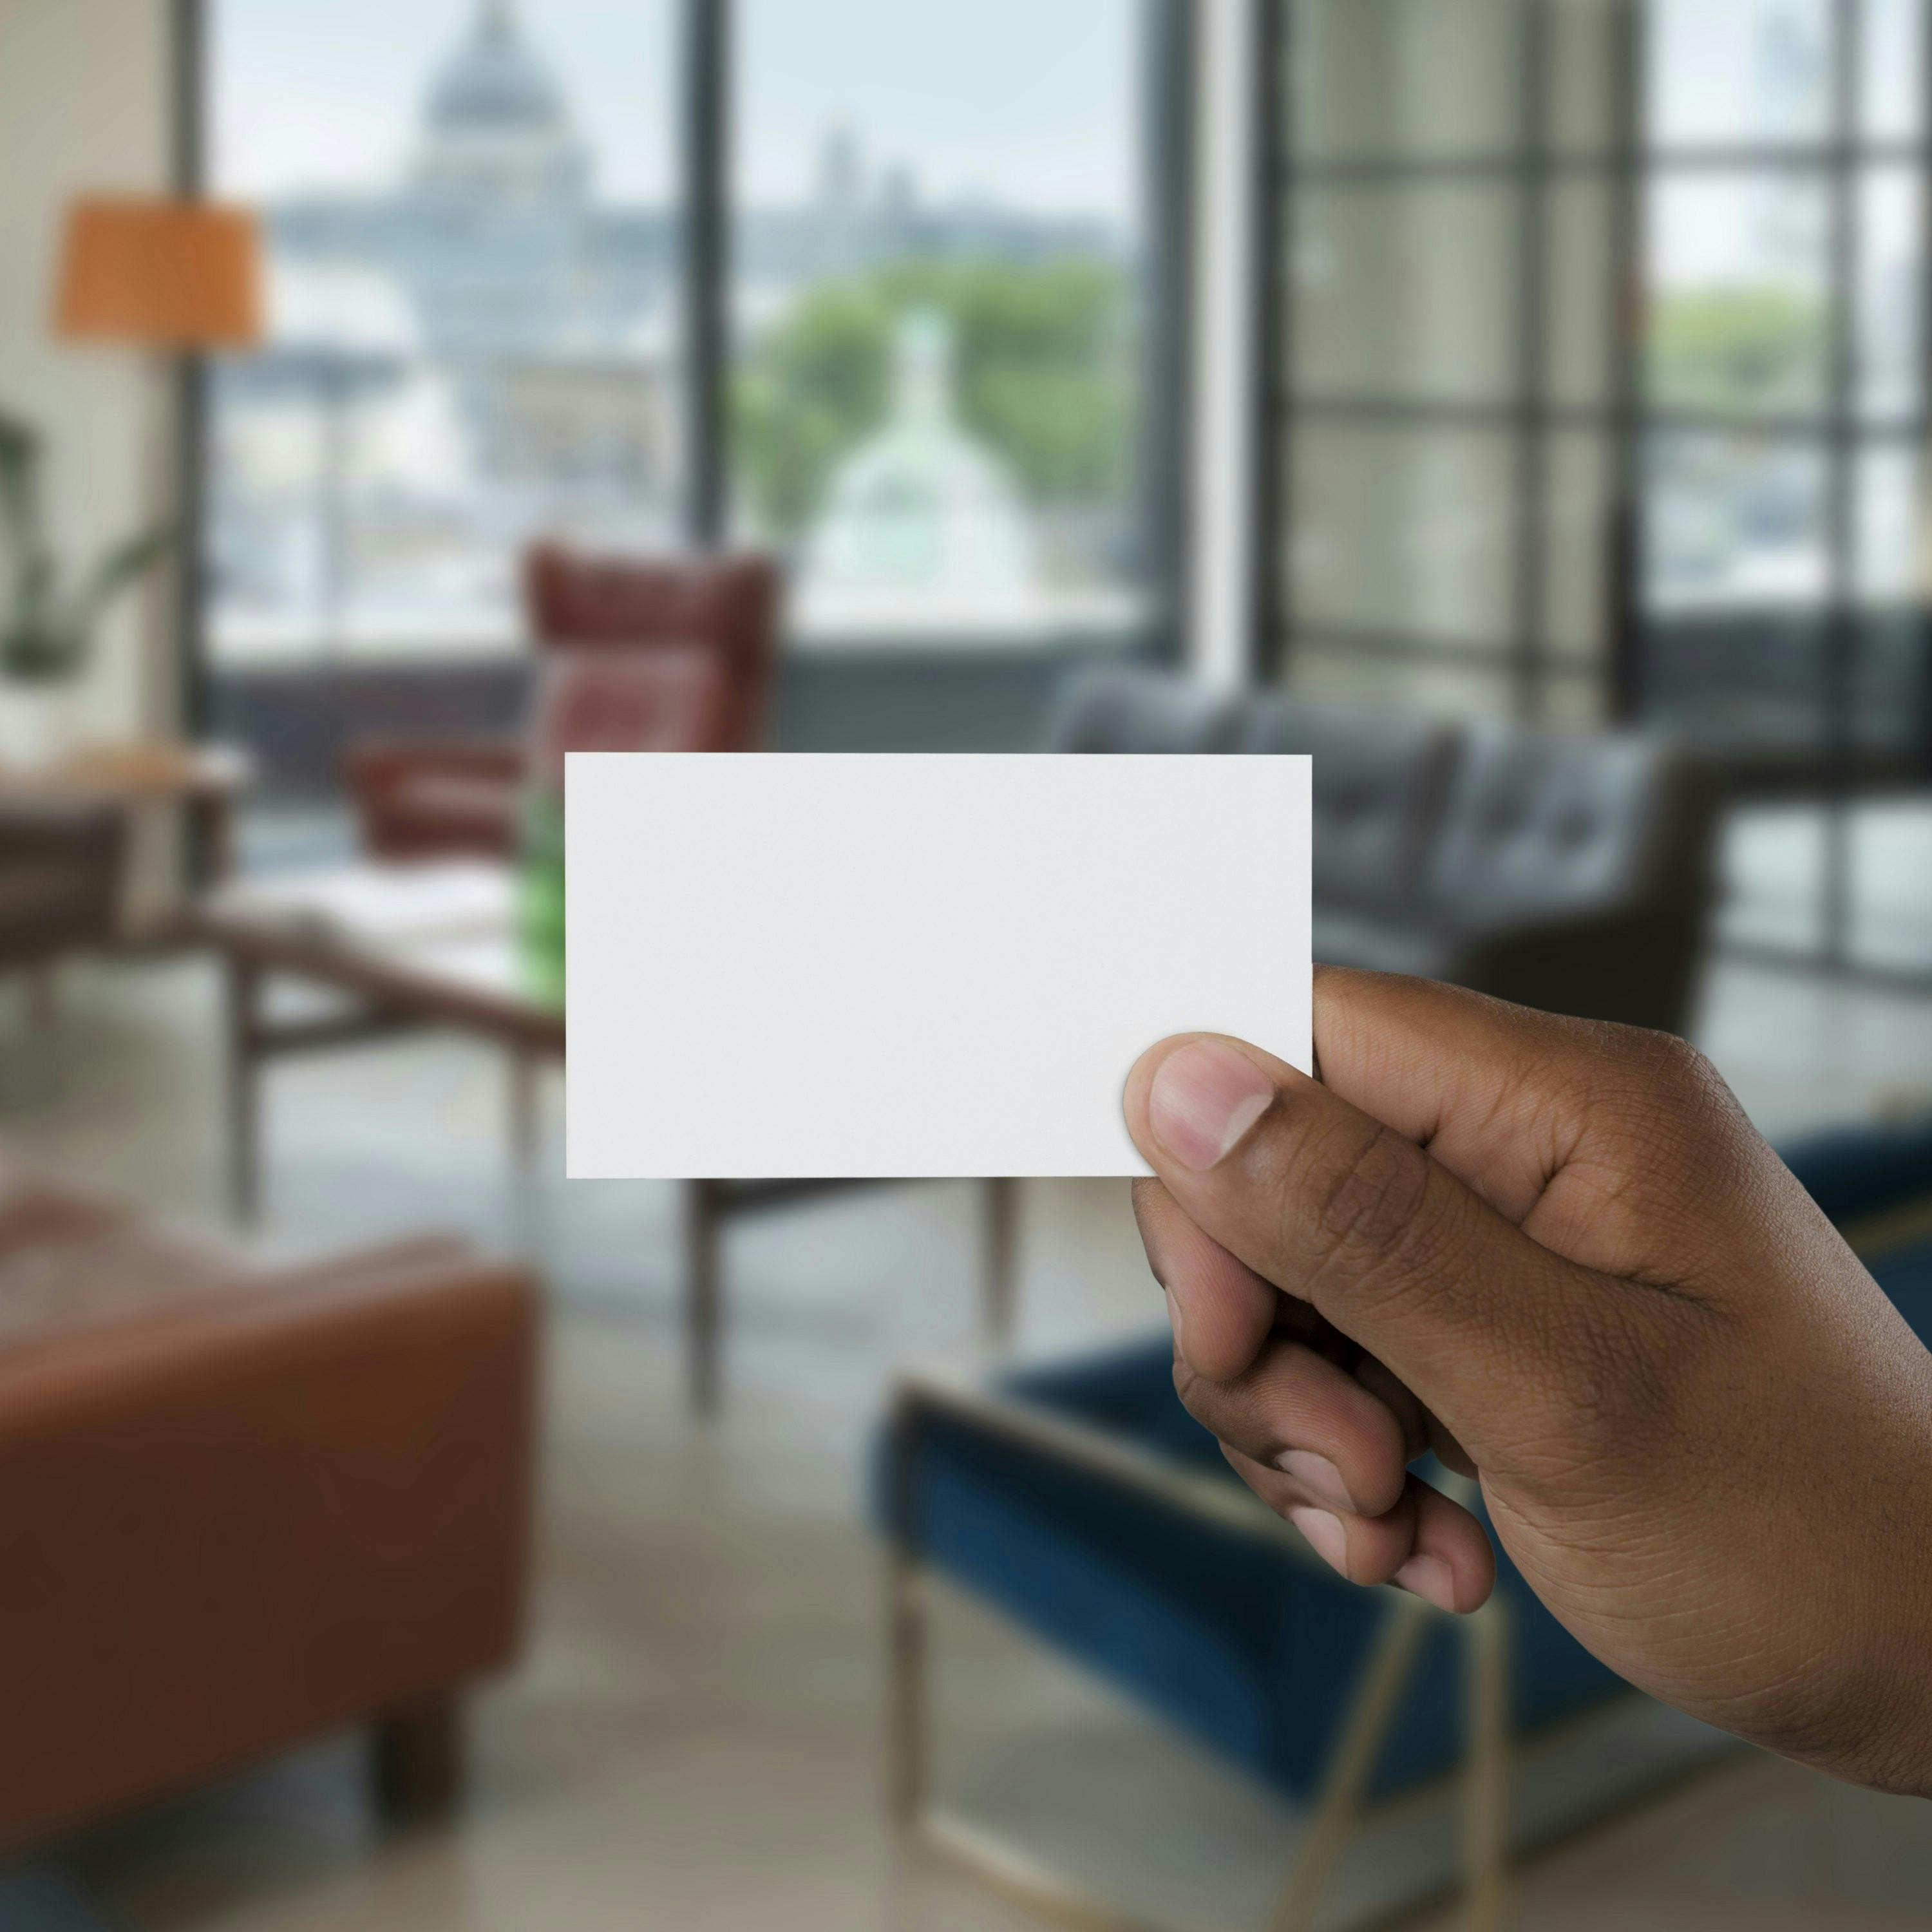 Marketing Image, Man holding blank white business card